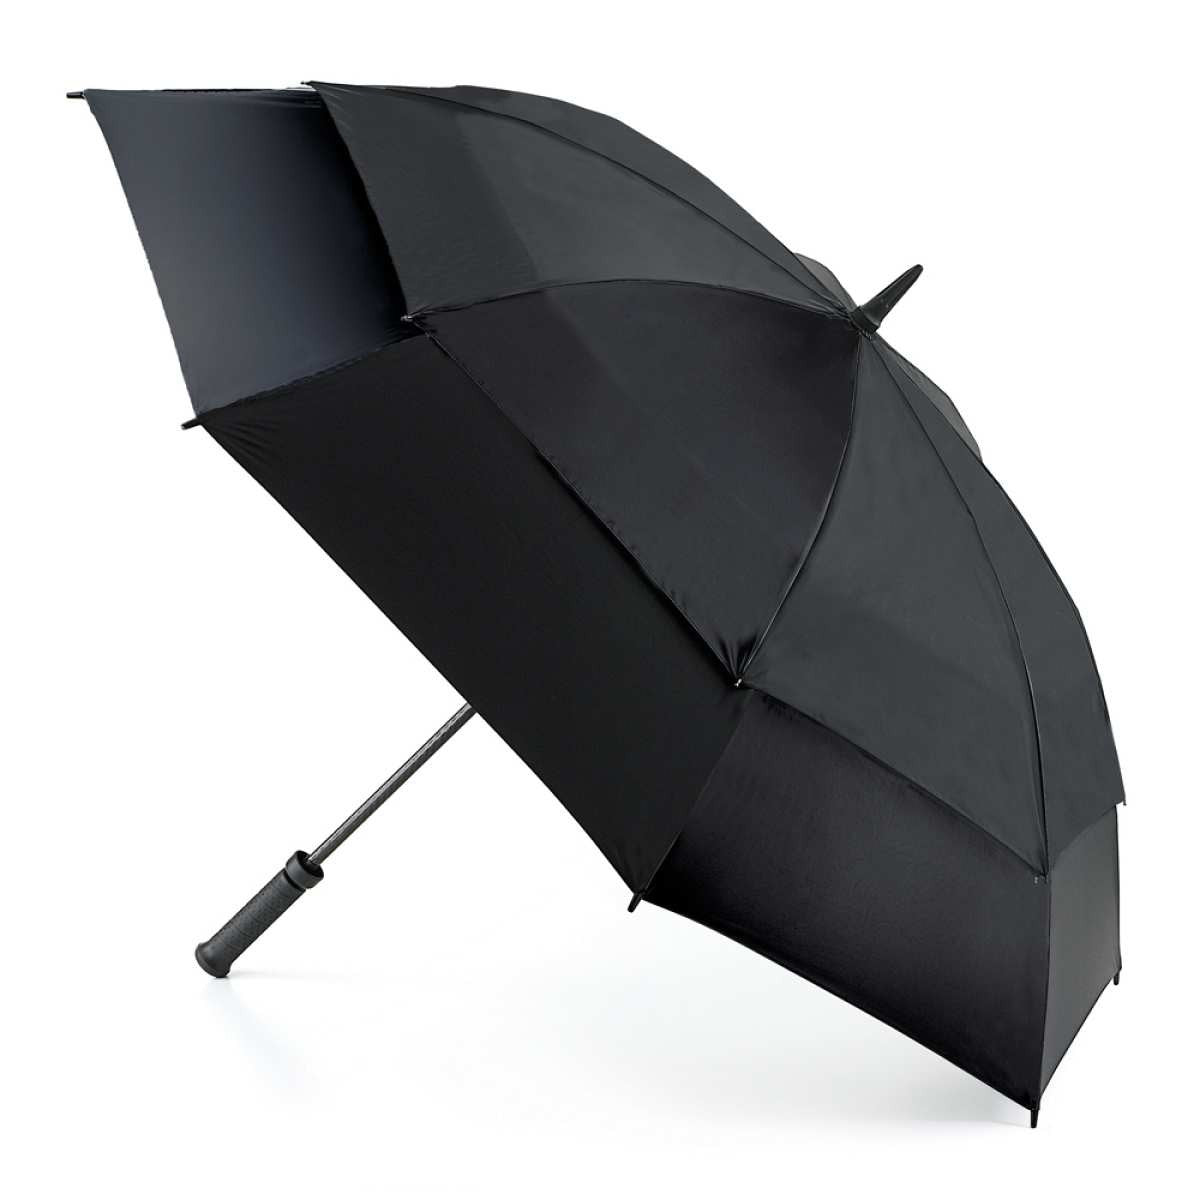 Fulton Stormshield Umbrella Black